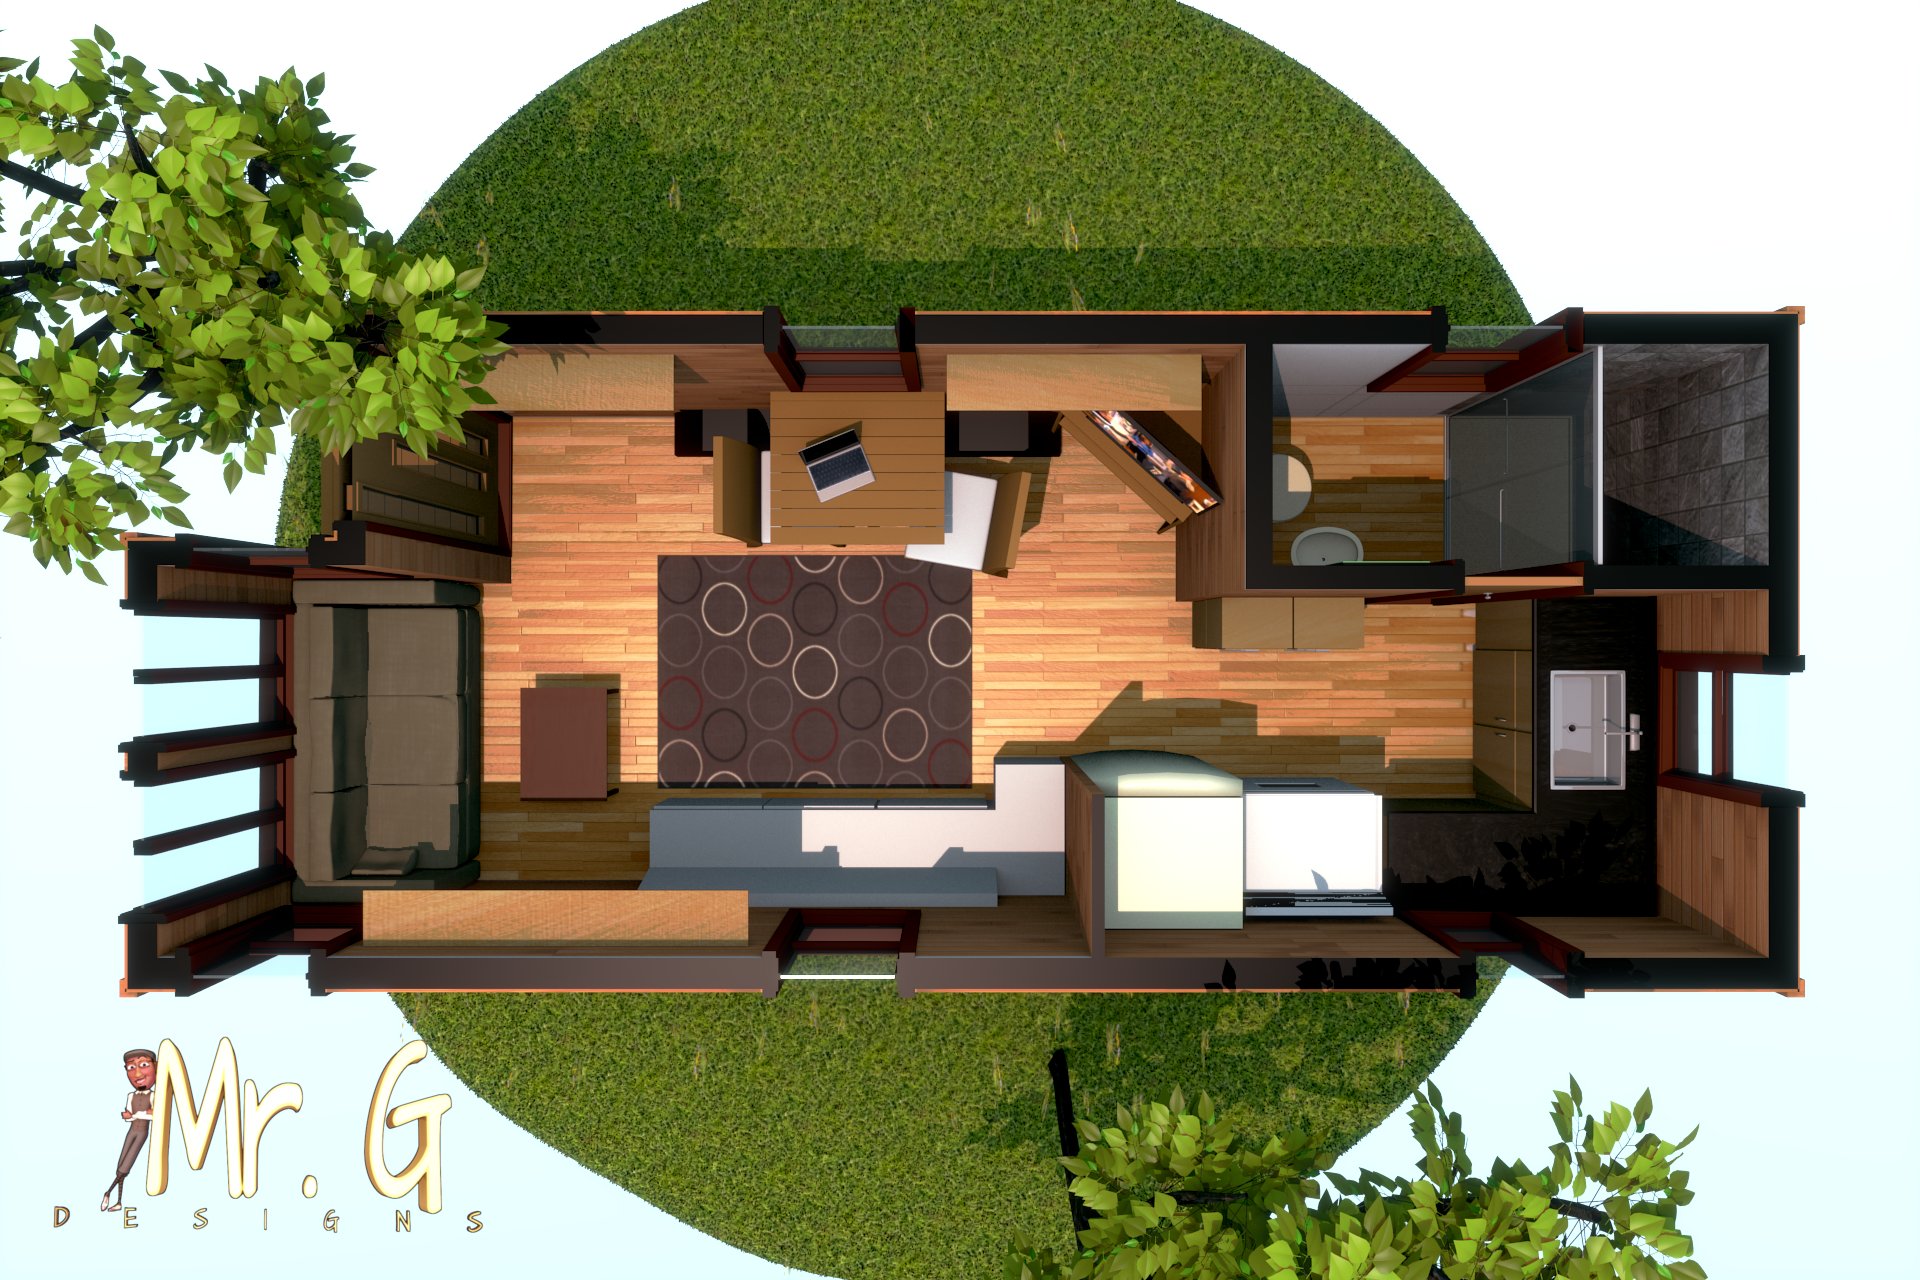 ArtStation - Tiny House 3D Floor Plan Model, Garrett S.